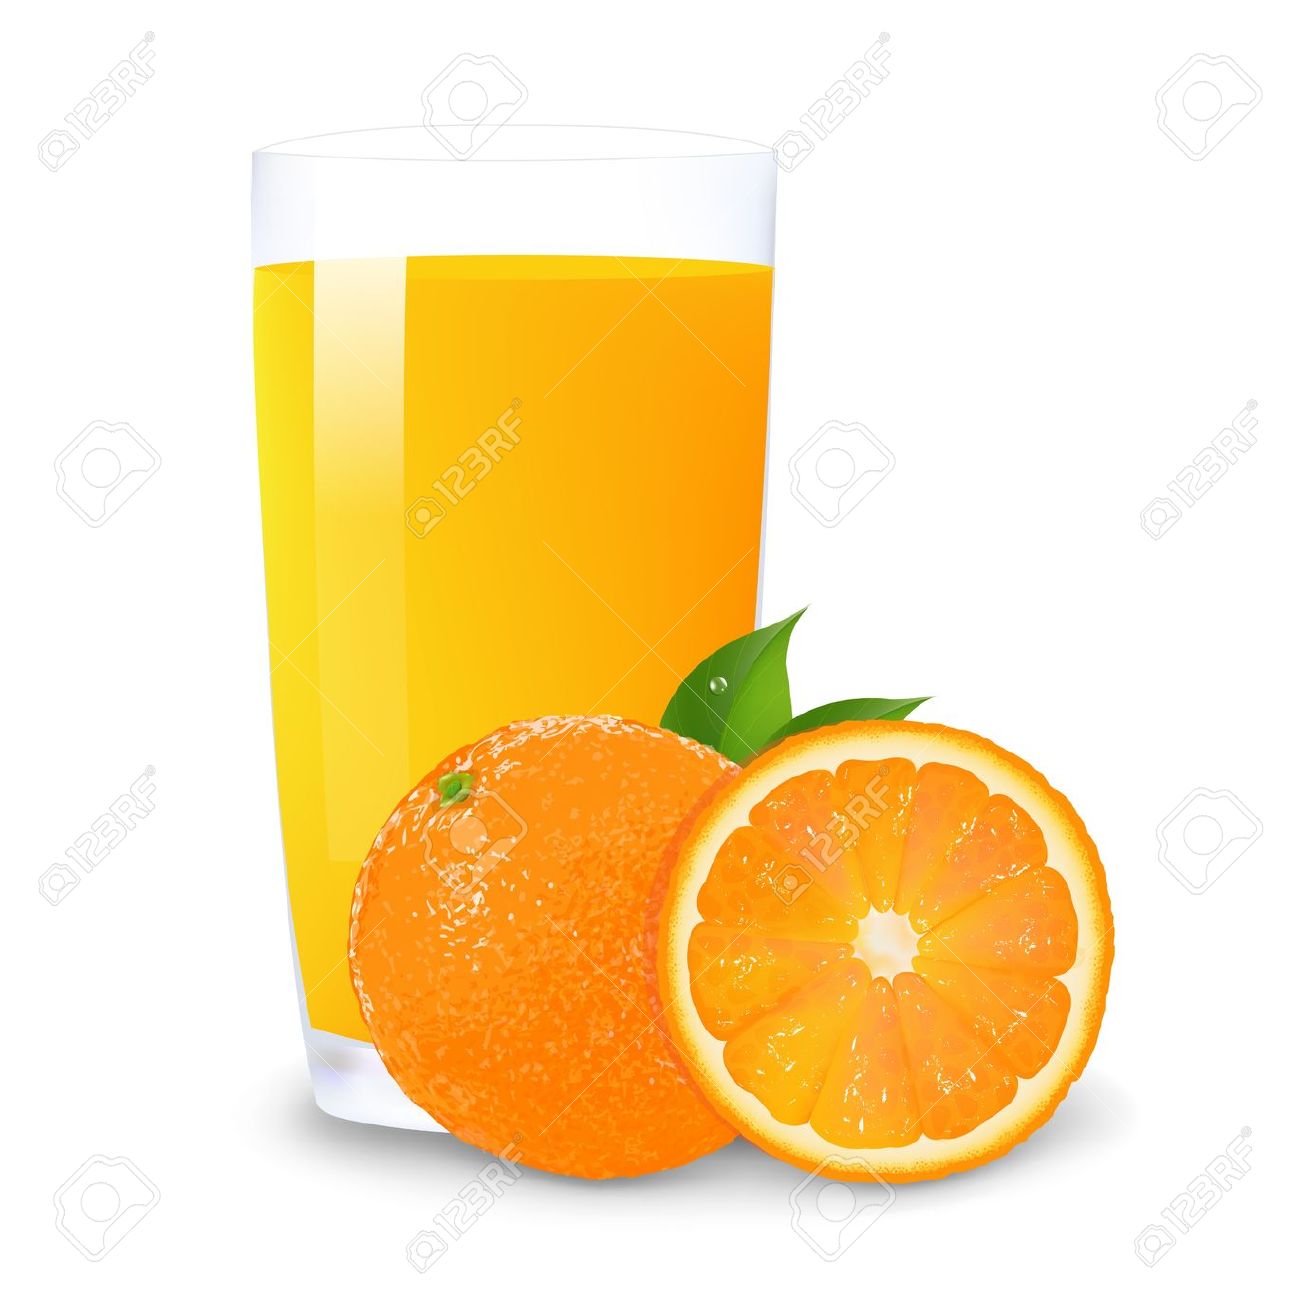 oranges and orange juice on .